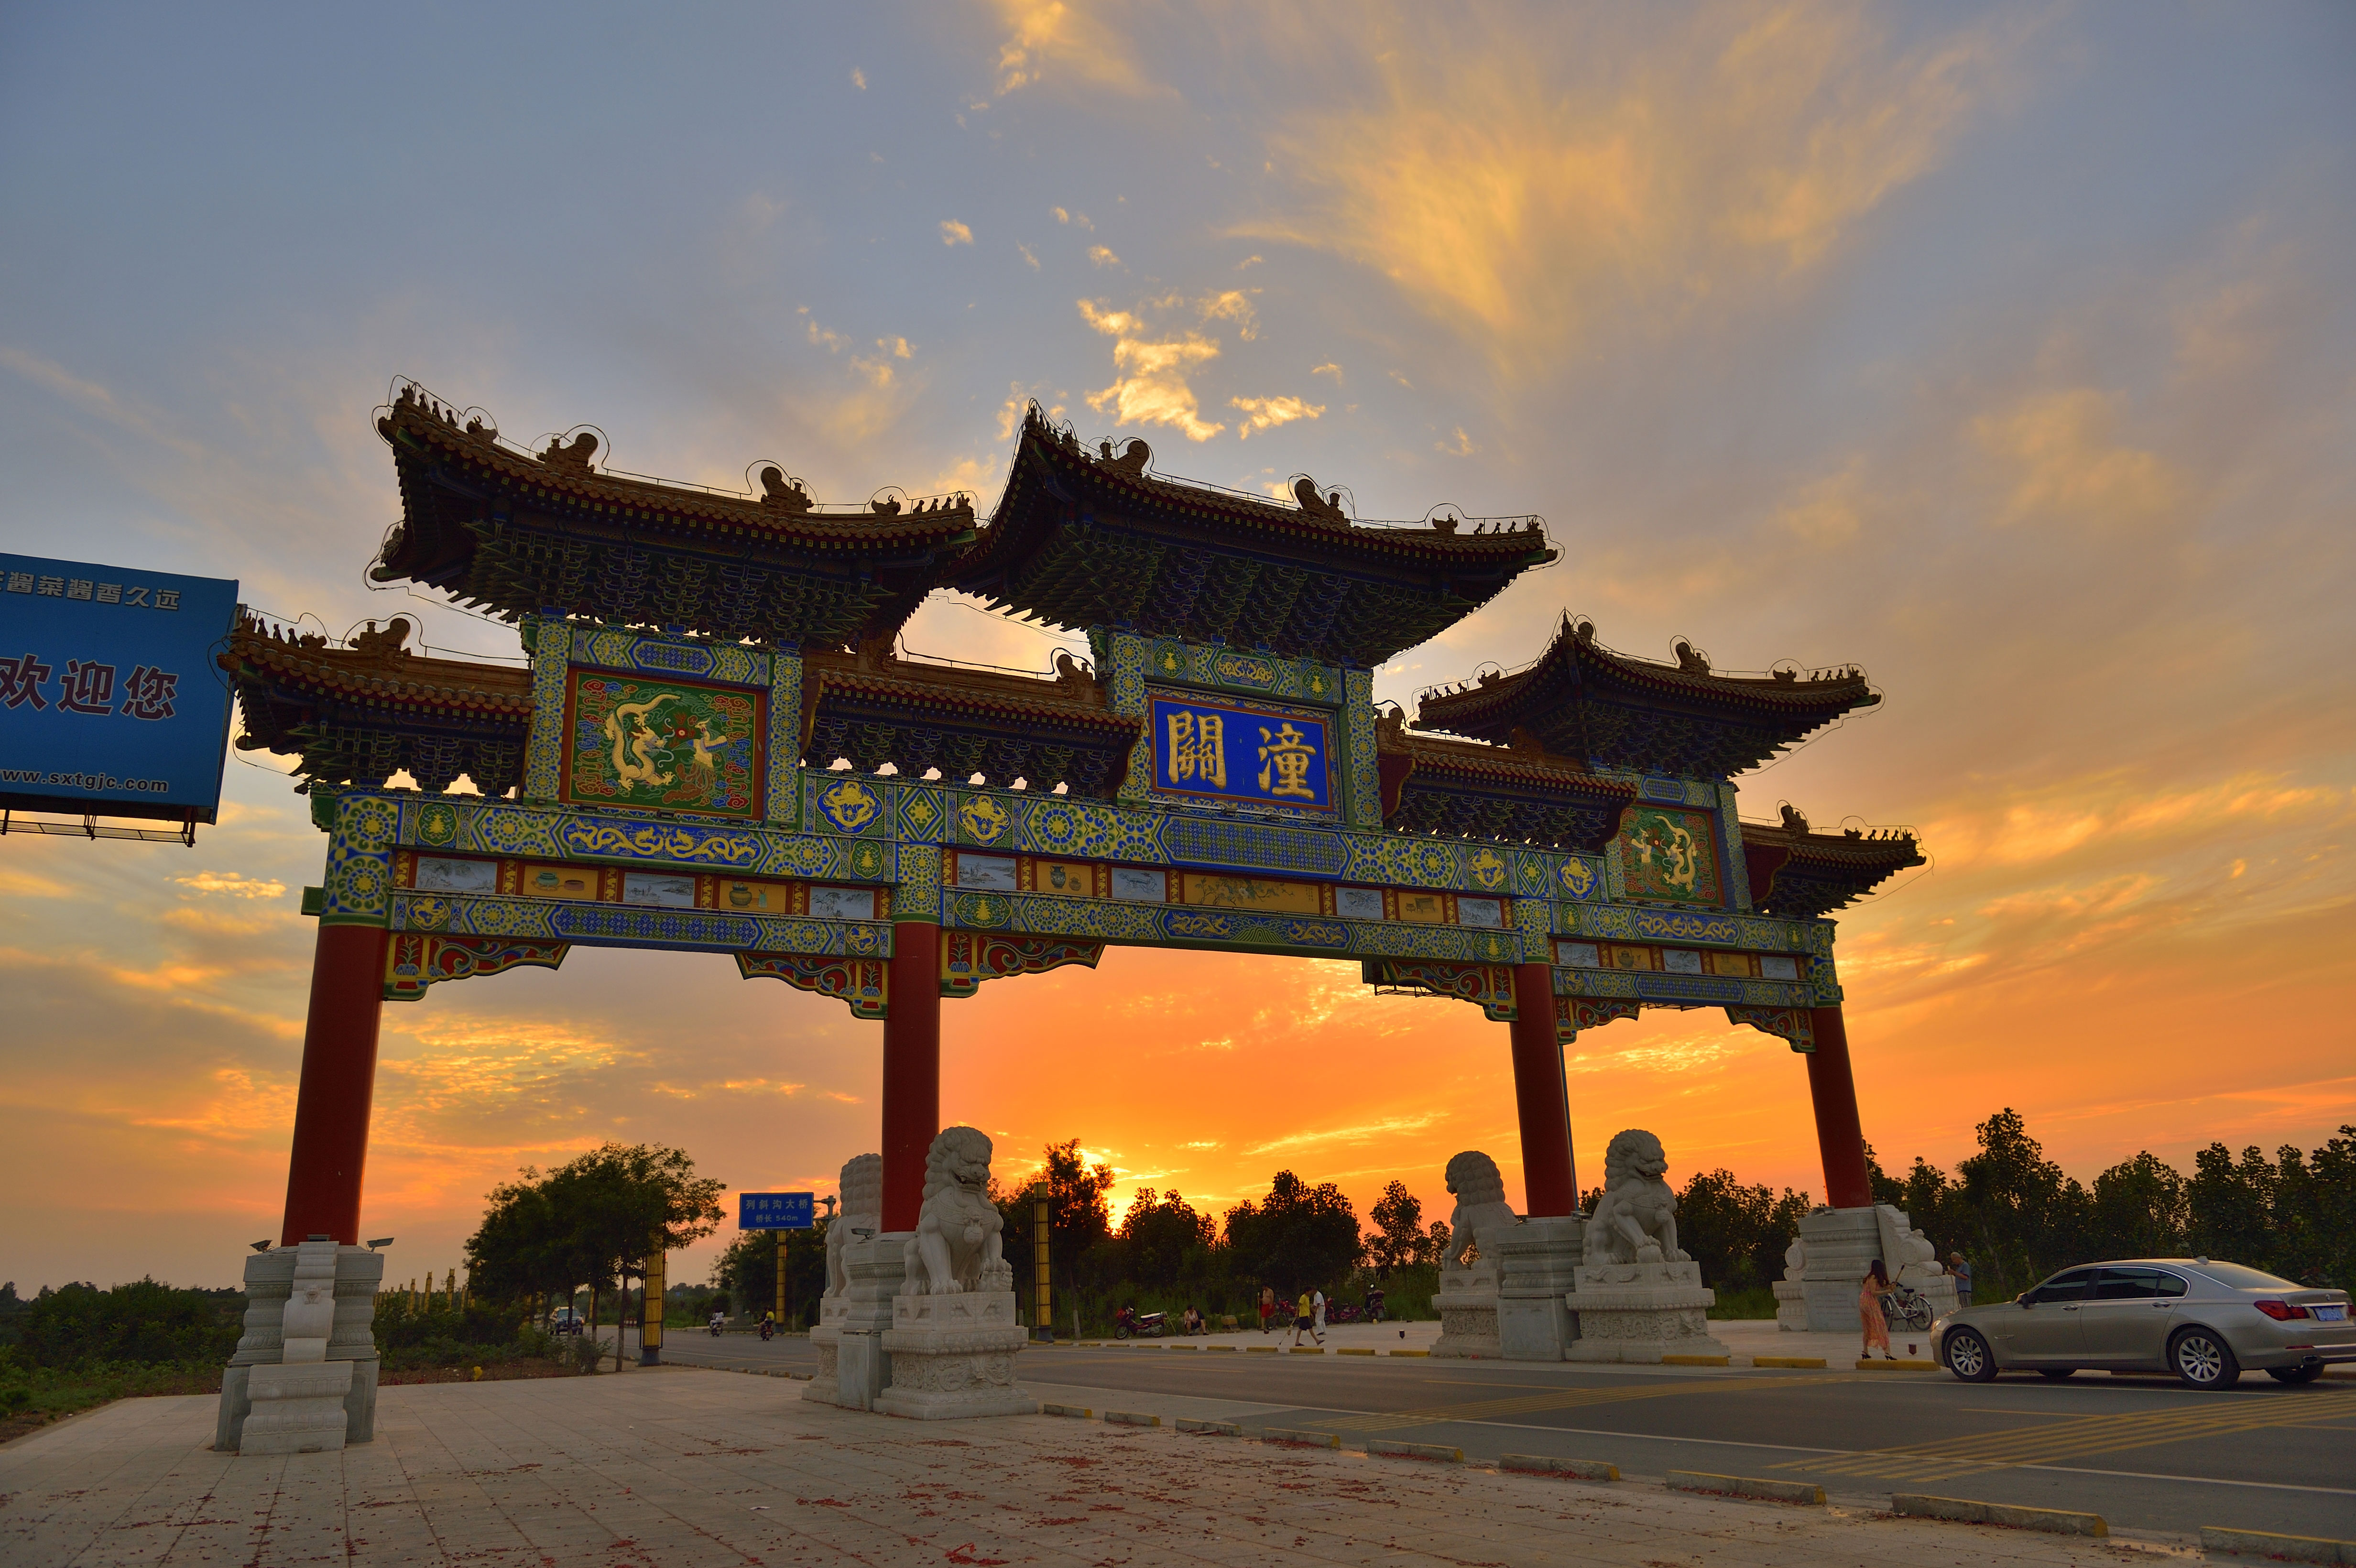 “Pass of the World” – Tongguan Ancient City Scenic Spot